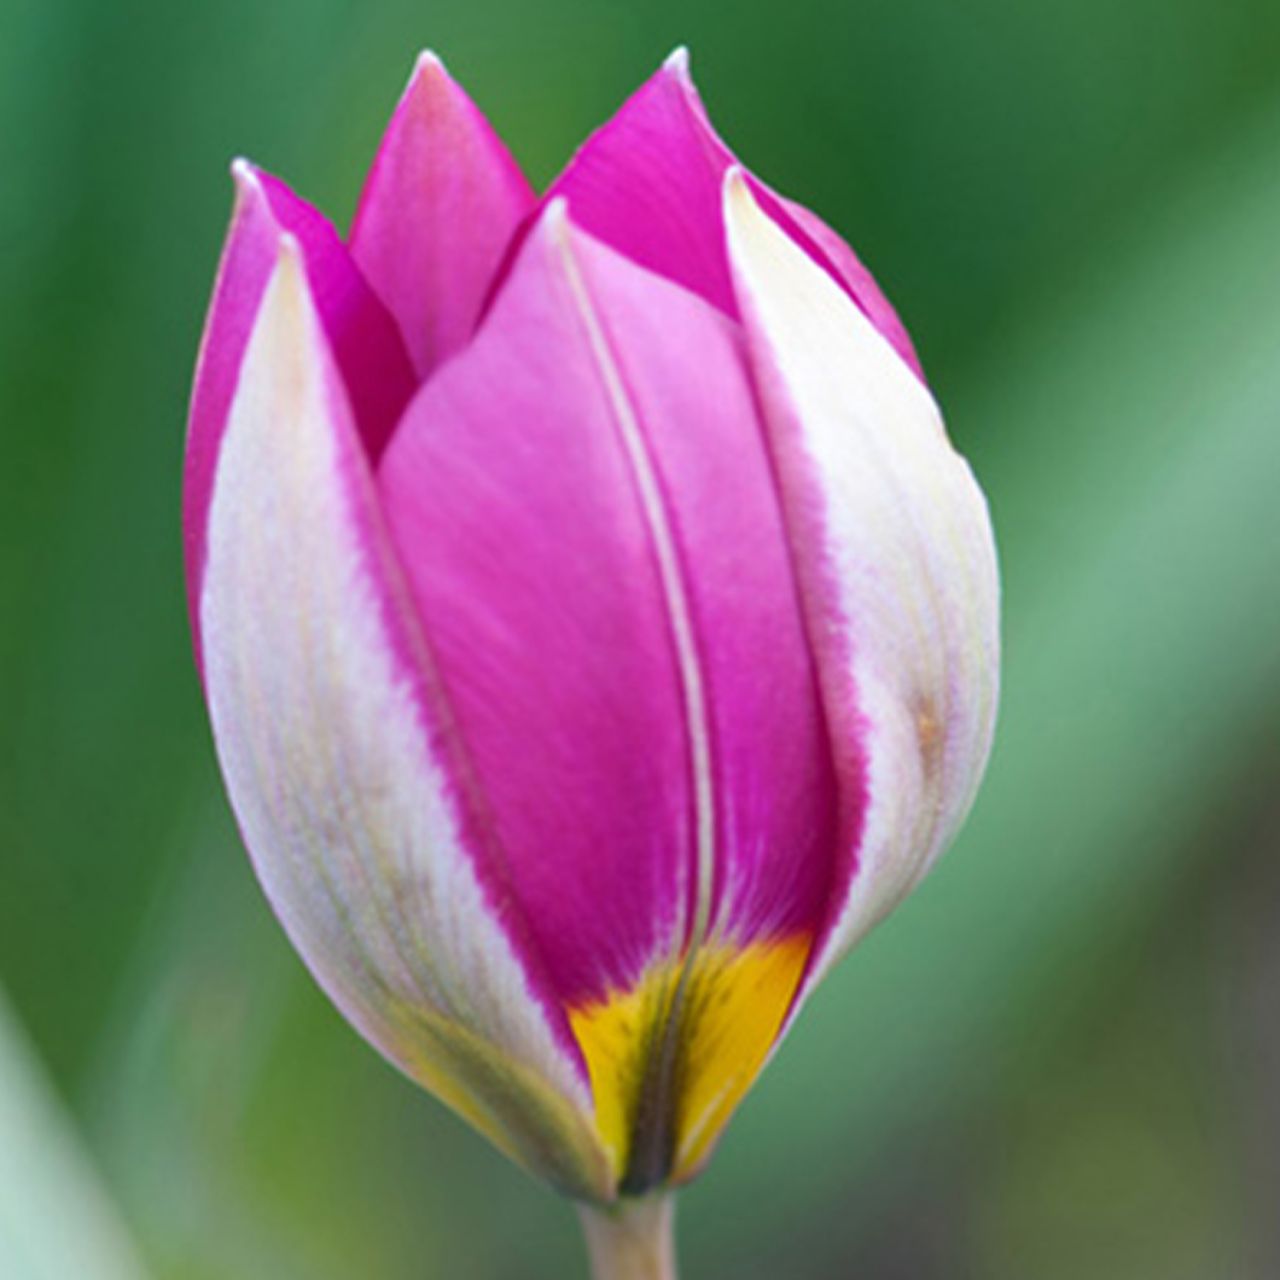 Kategorie <b>Herbst-Blumenzwiebeln </b> - Wildtulpe 'Pulchella Persian Pearl' - 10 Stück - Tulipa 'Pulchella Persian Pearl'